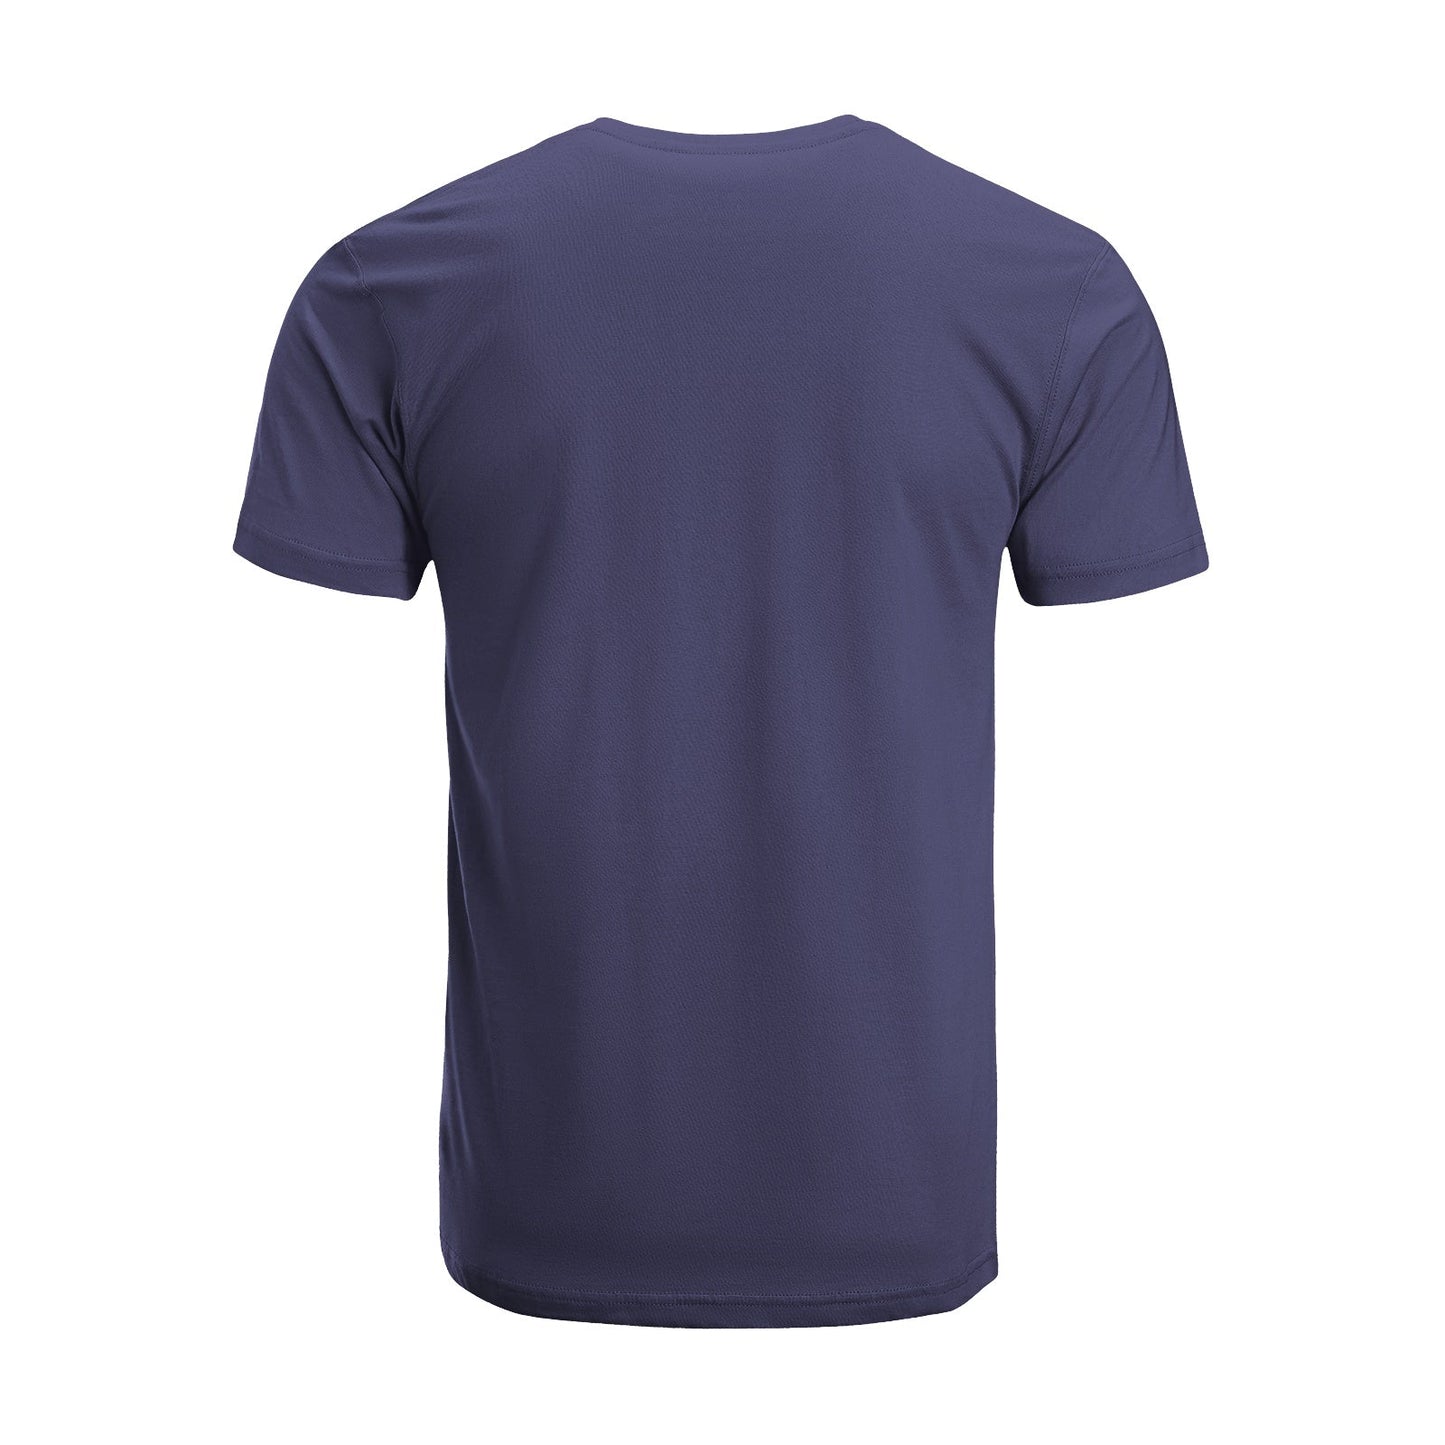 Unisex Short Sleeve Crew Neck Cotton Jersey T-Shirt MOM 04